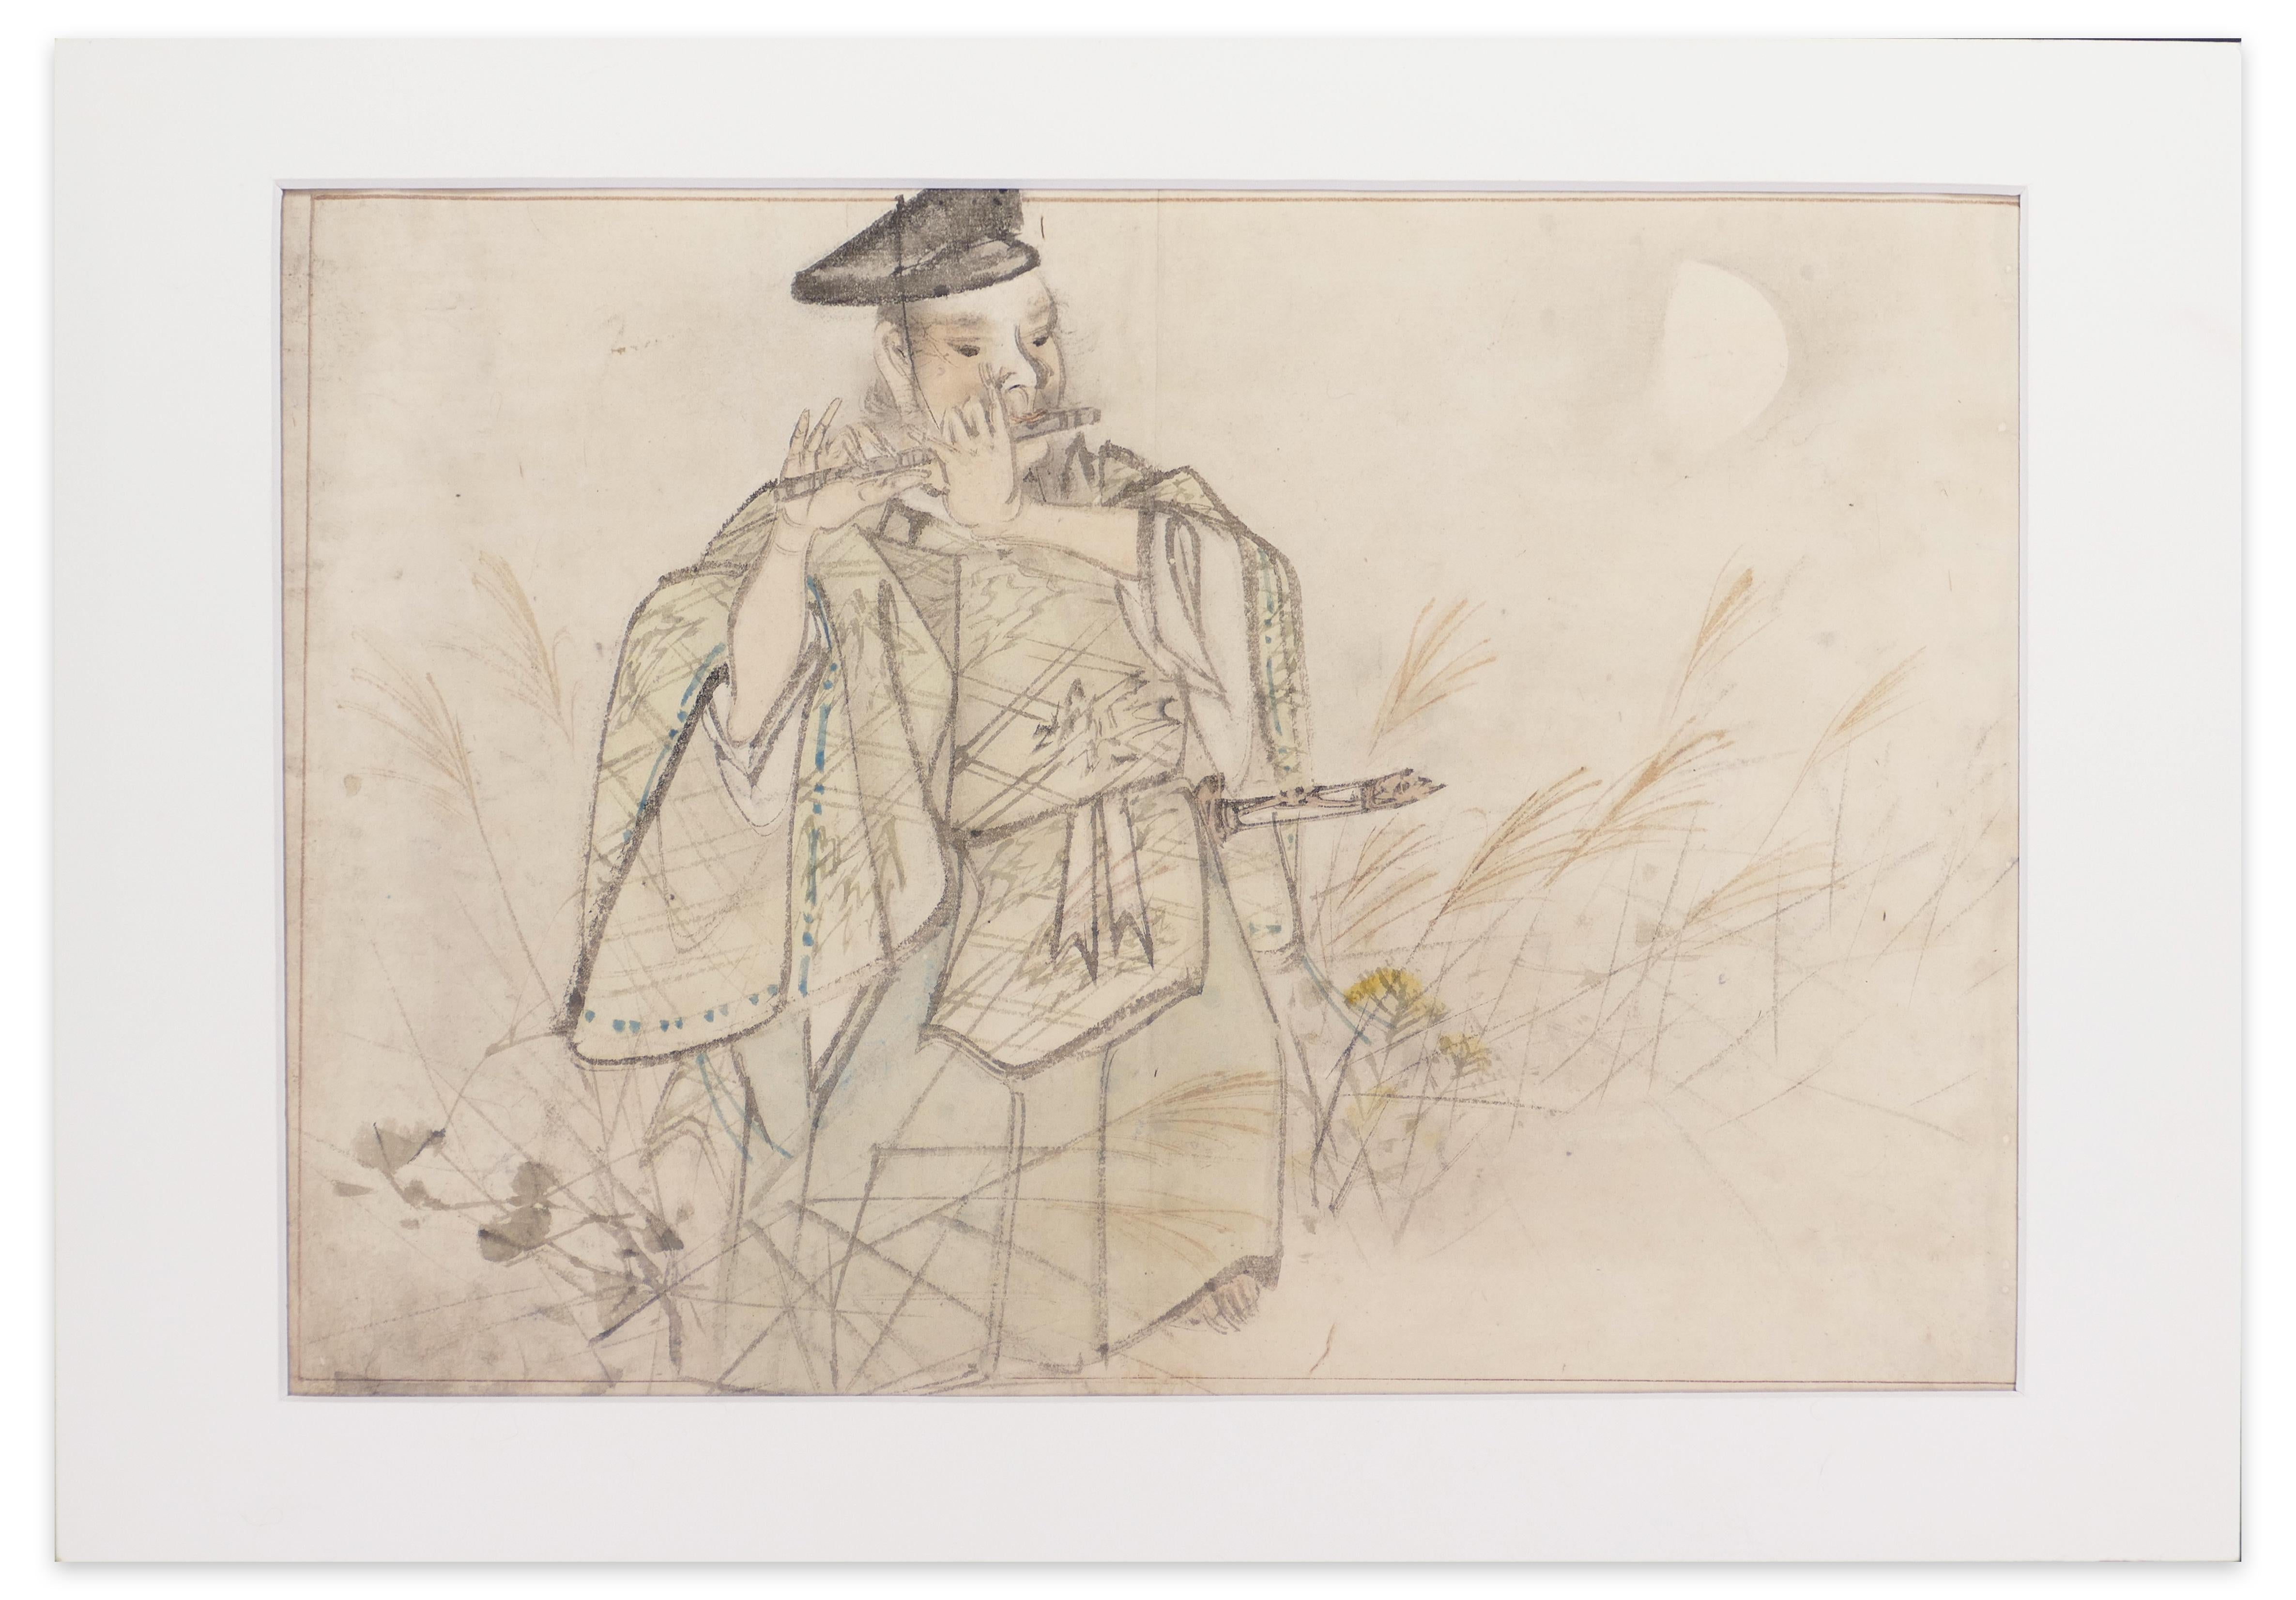 Samurai Playing Flute - Mixed Media by Matsumura Keibun School - 1800